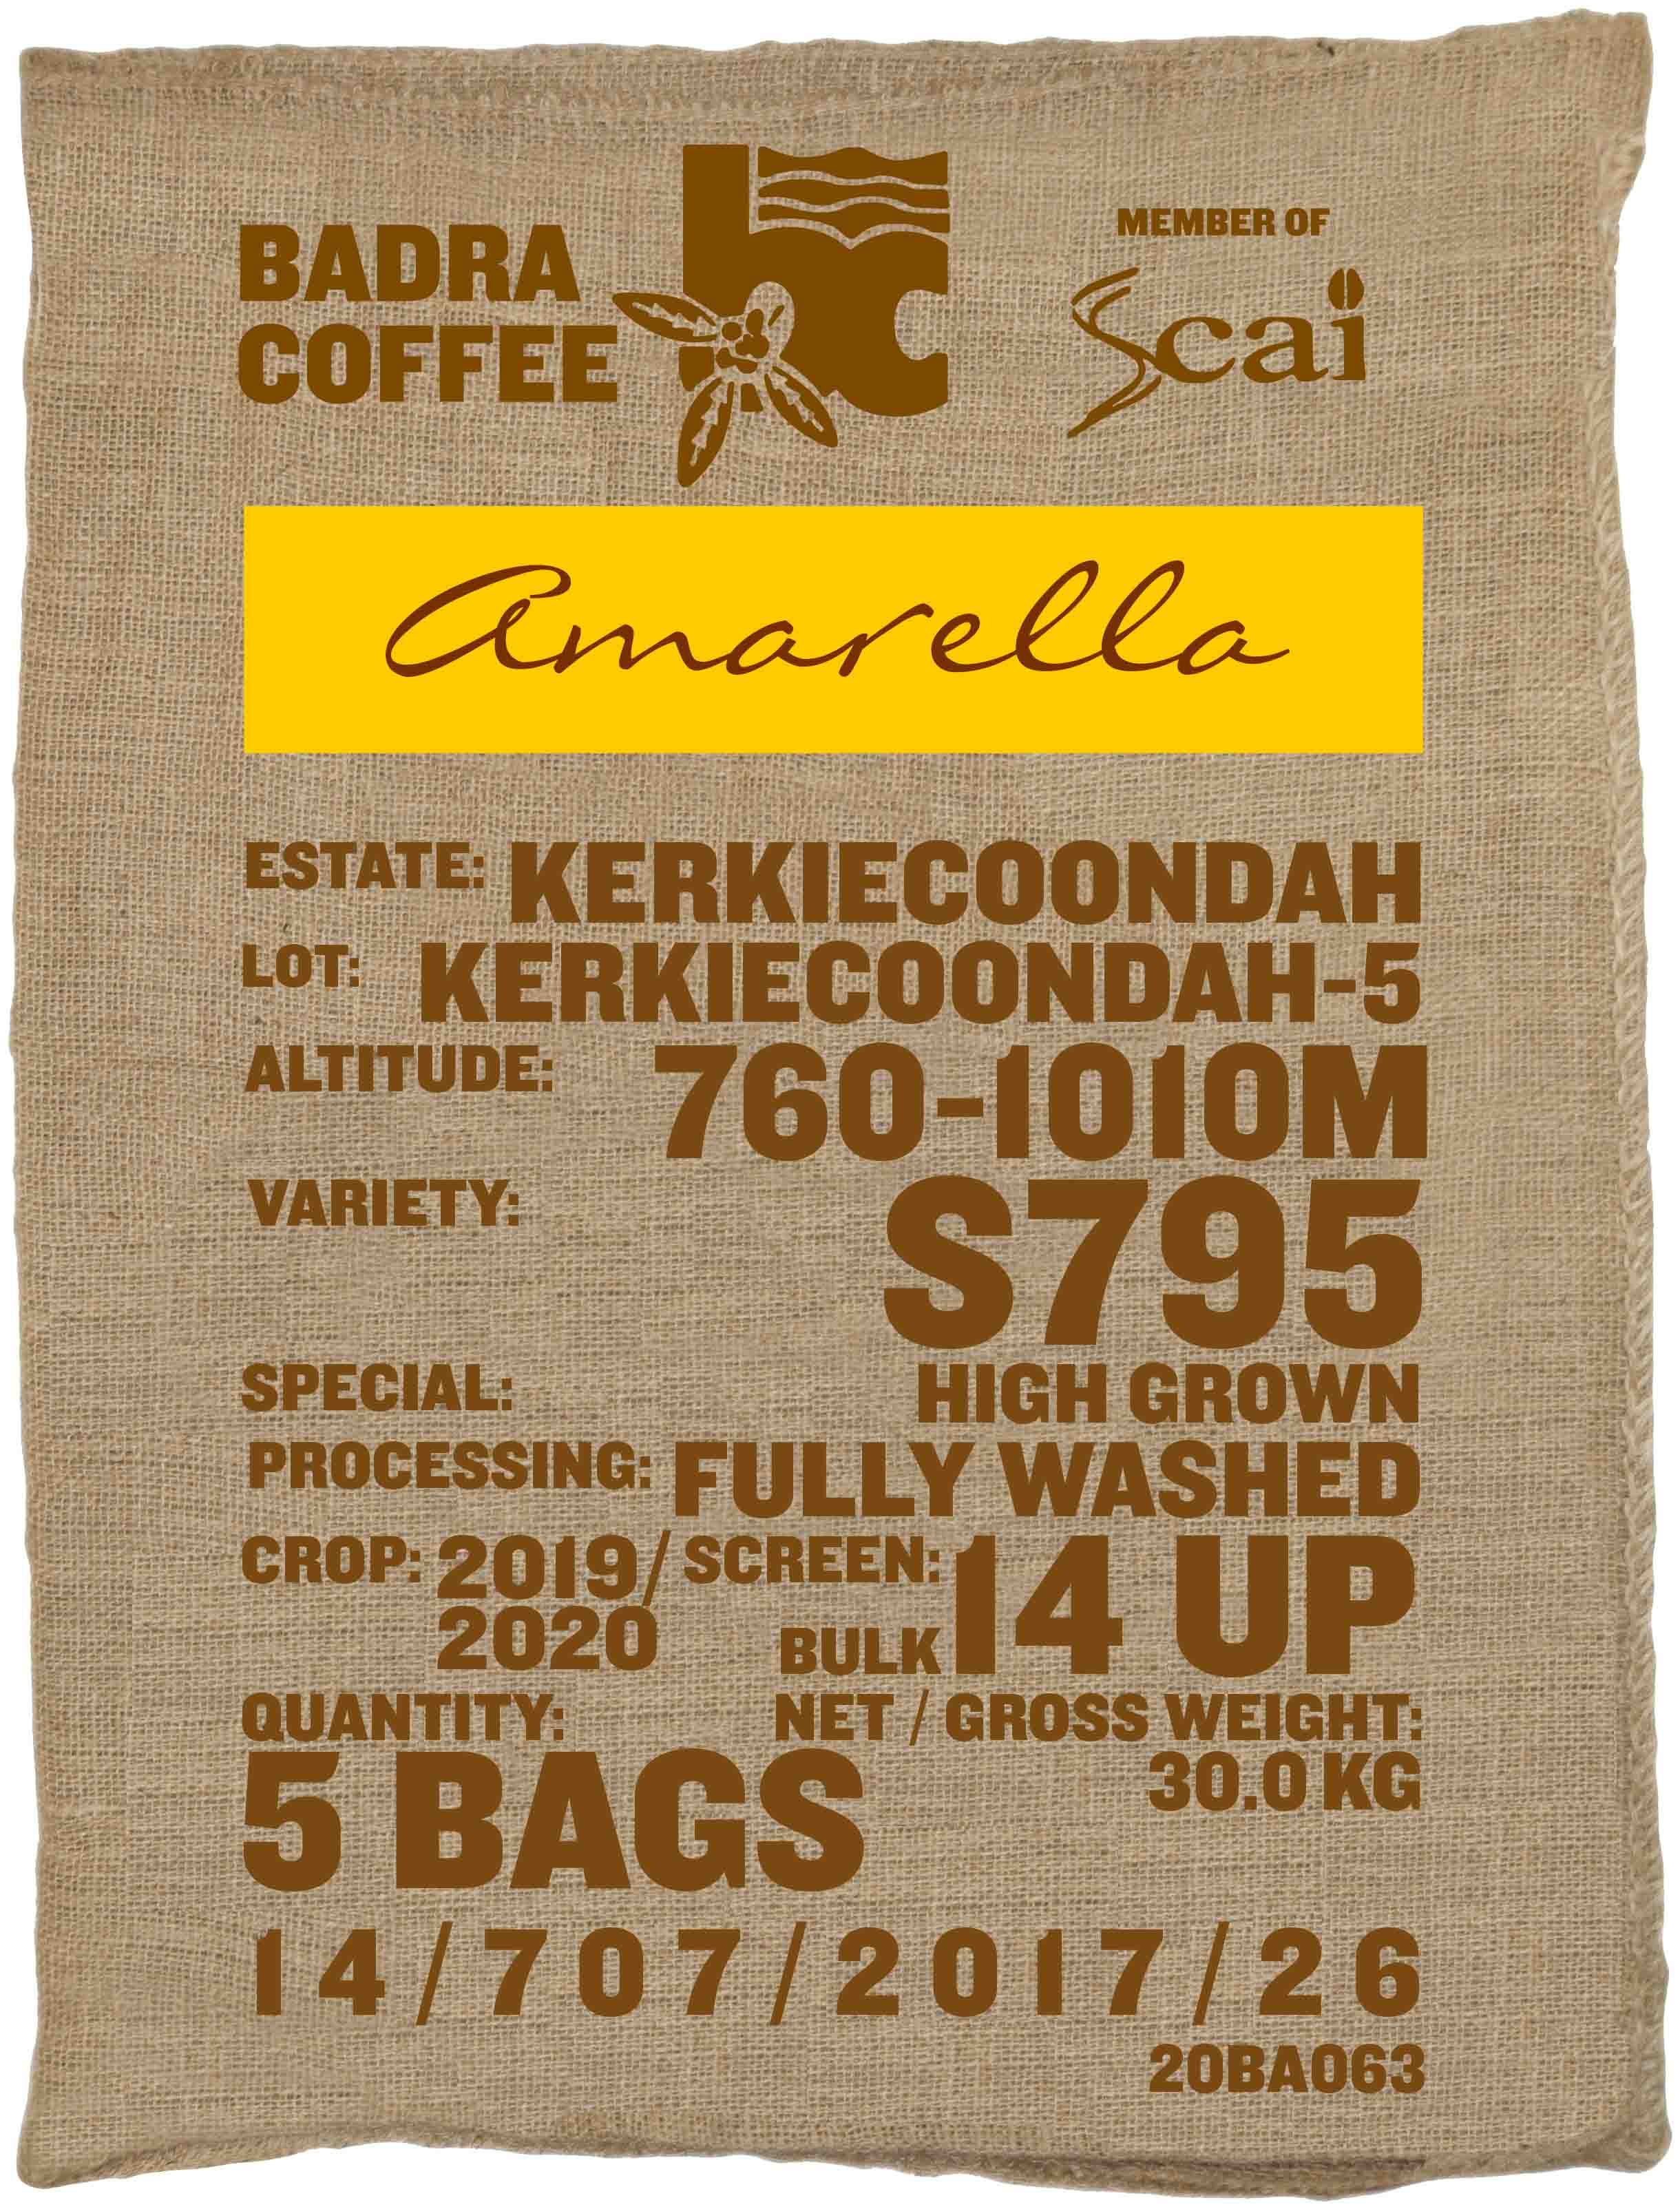 Ein Rohkaffeesack amarella Parzellenkaffee Varietät S795. Badra Estates Lot Kerkiecoondah 5.